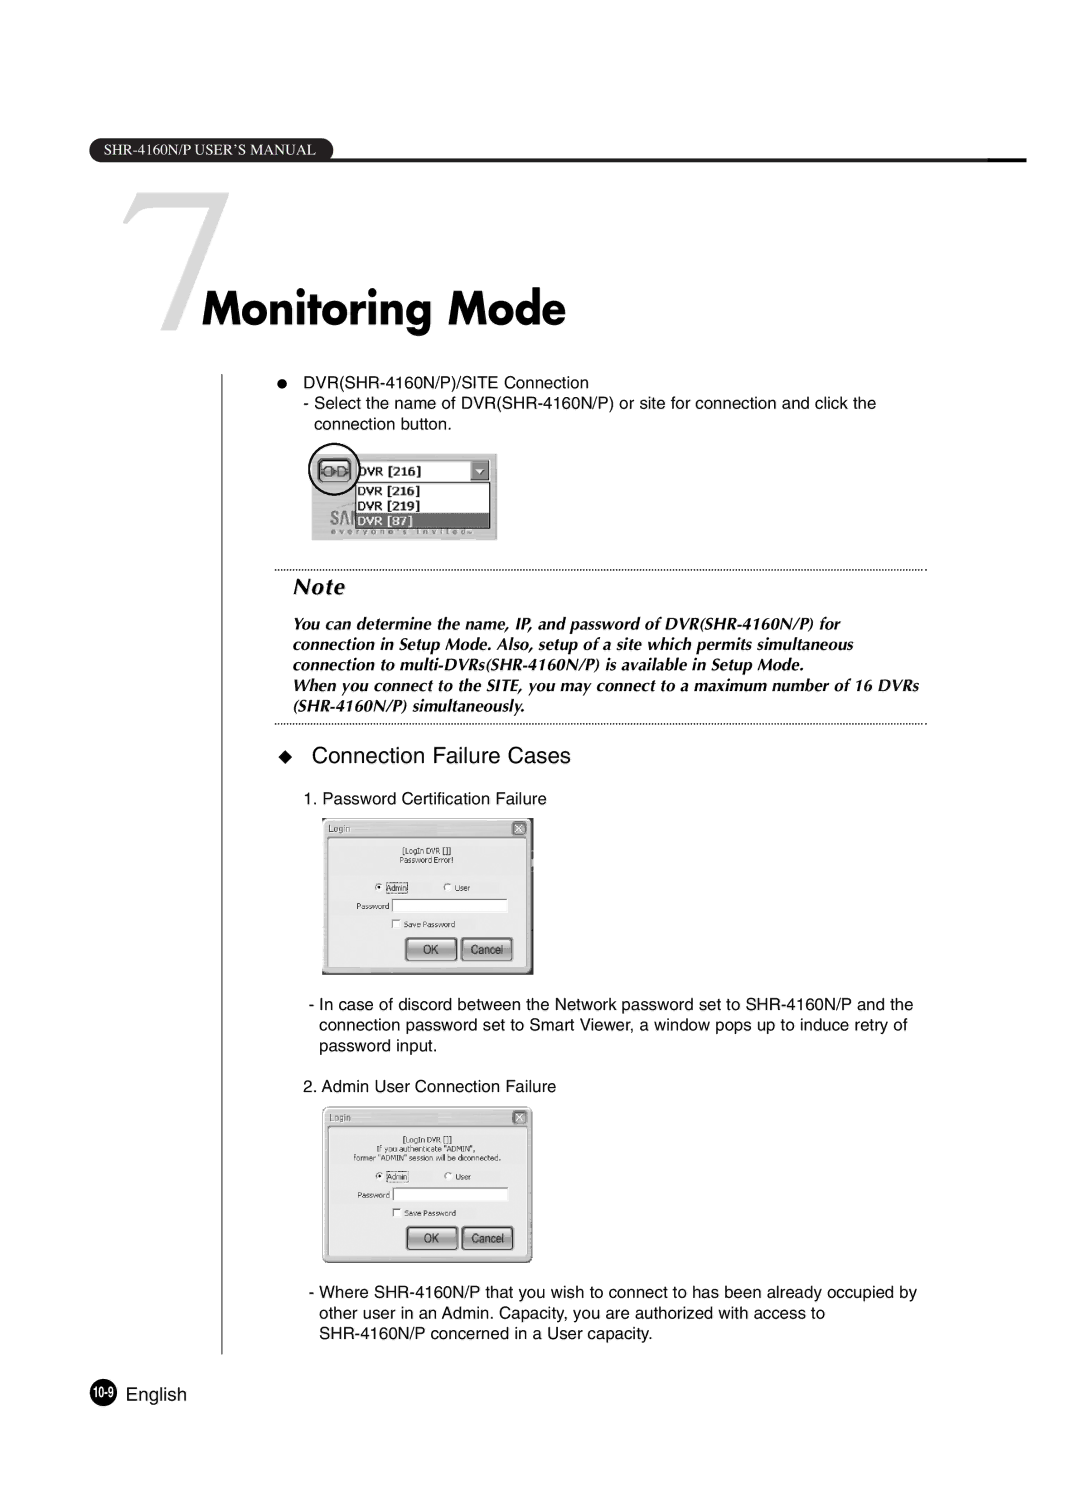 Samsung SHR-4160P manual 7Monitoring Mode, 10-9English 